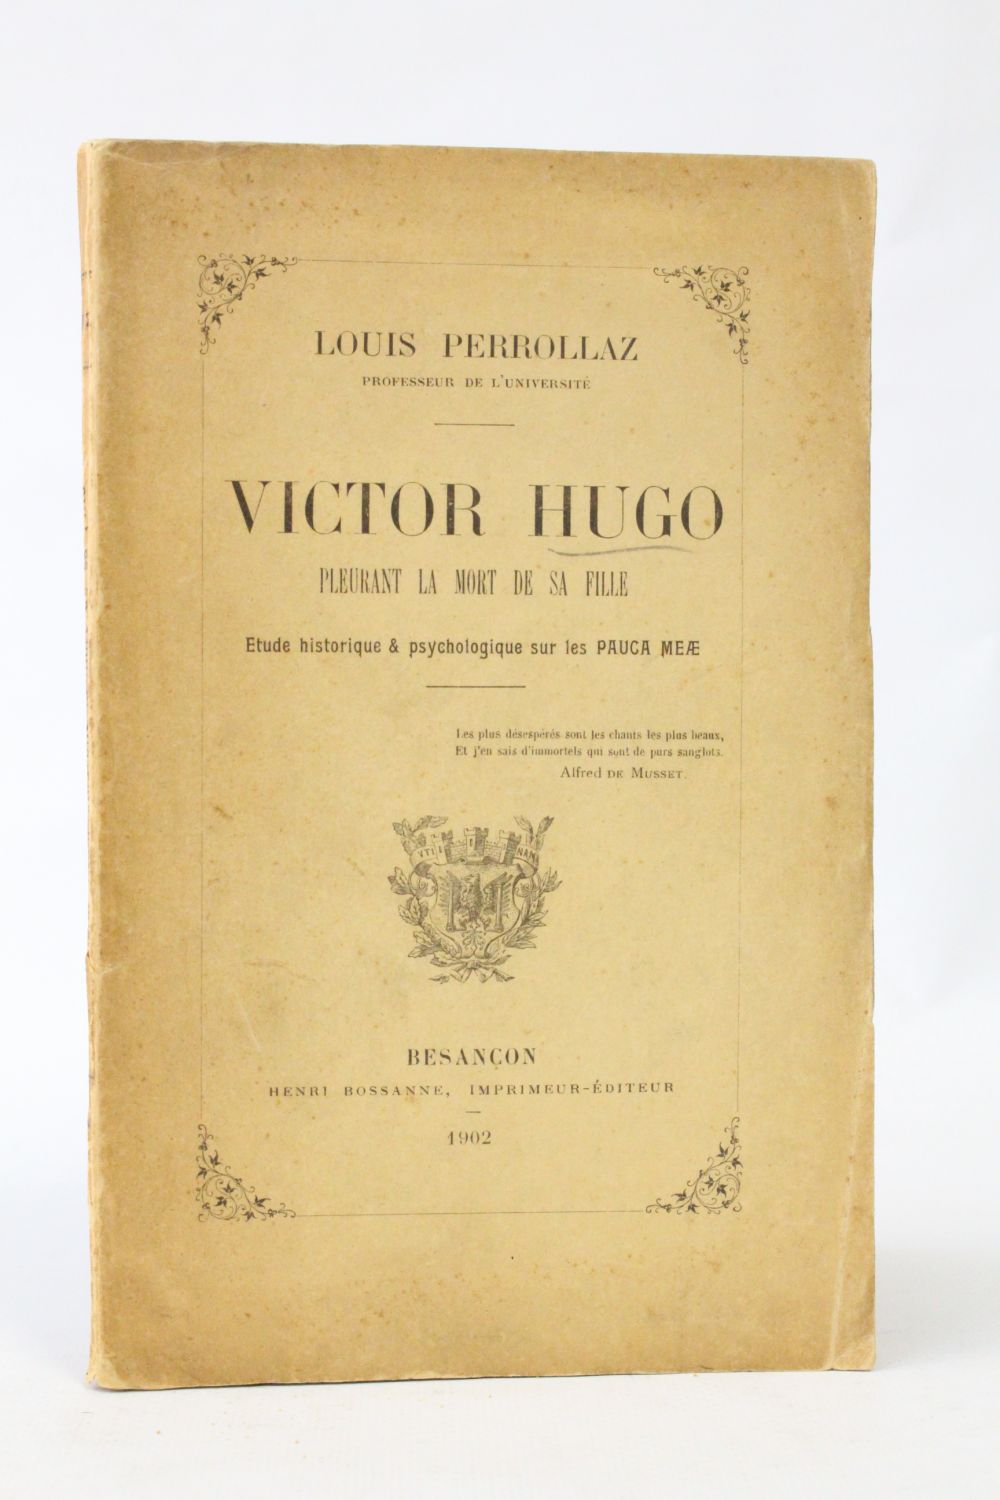 Ebook: Les Fleurs, Victor Hugo, Gallimard, Folio 2 euros / 3 euros,  2800227099188 - Librairie L'Armitière